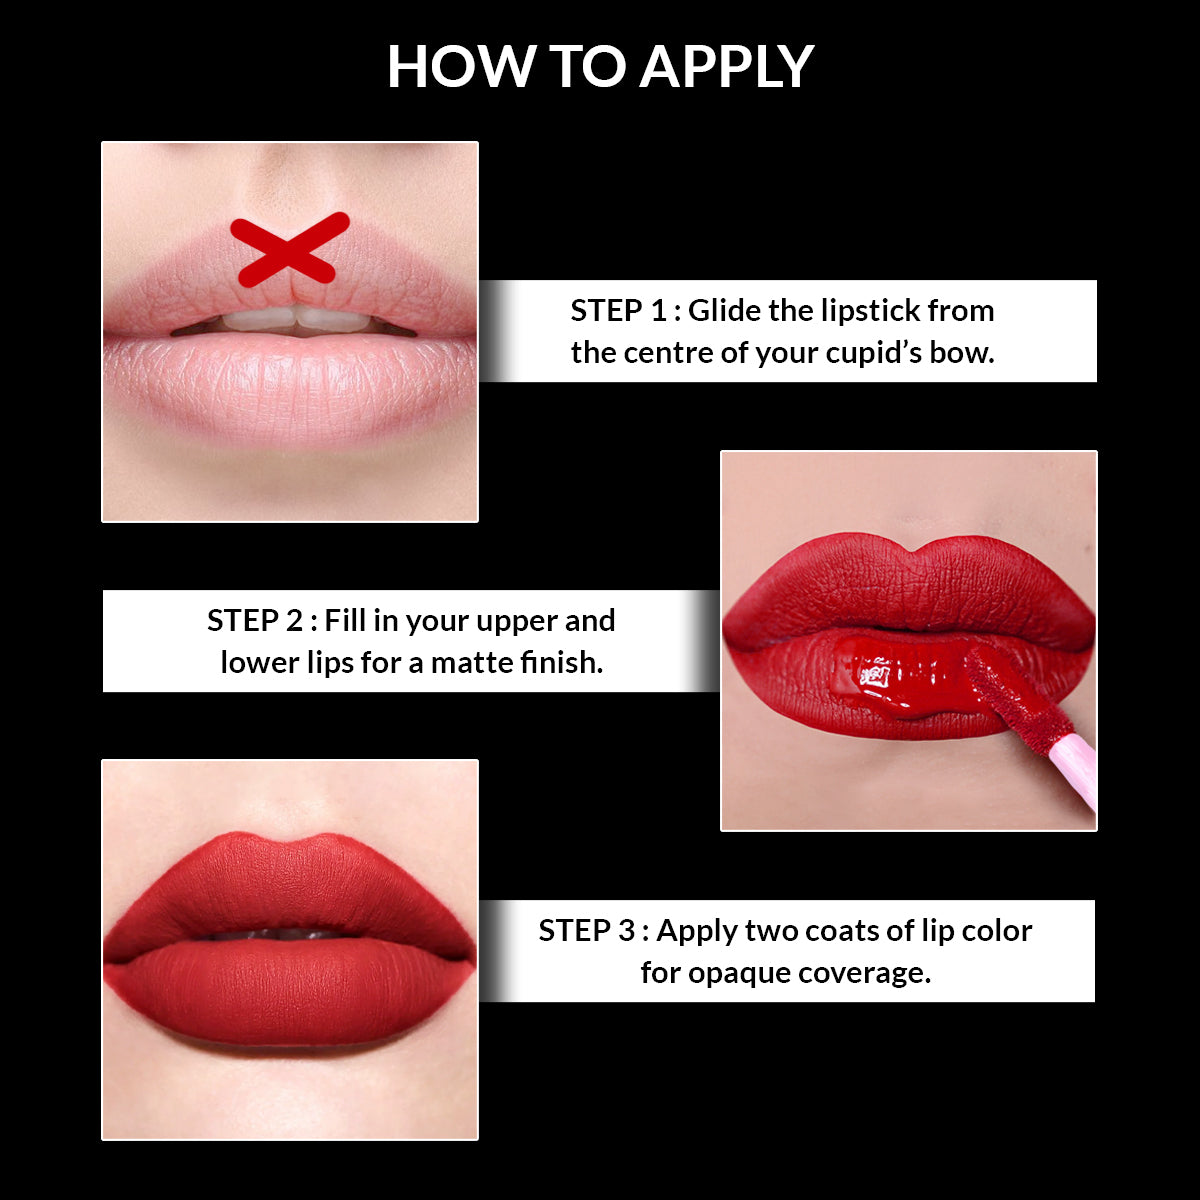 Lip Pop Lipstick